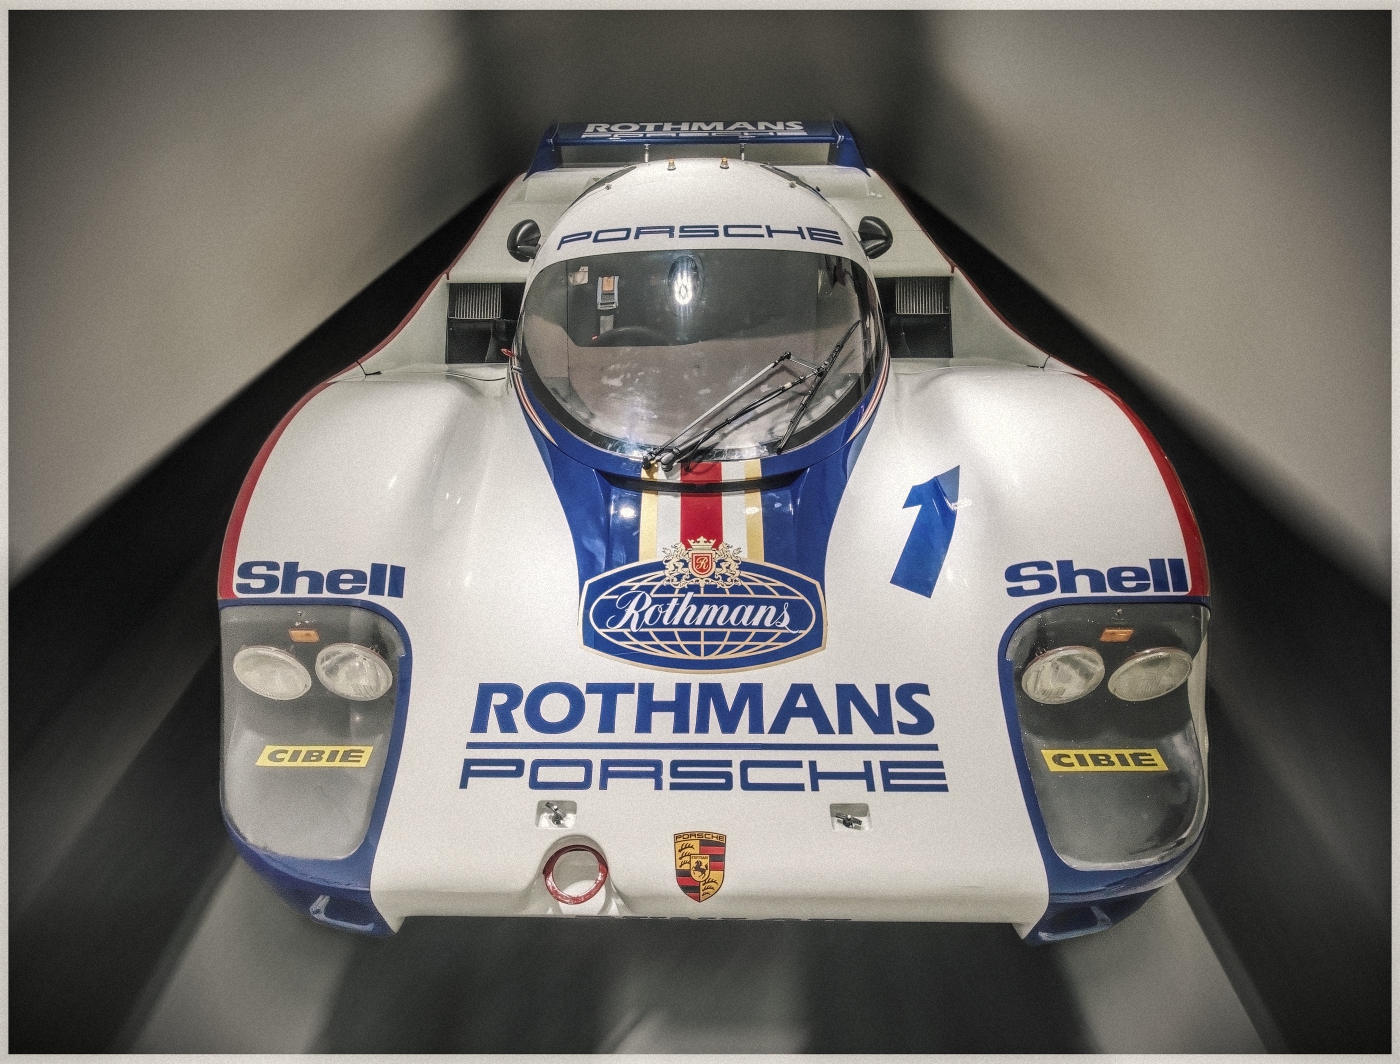 Rothmanns Porsche